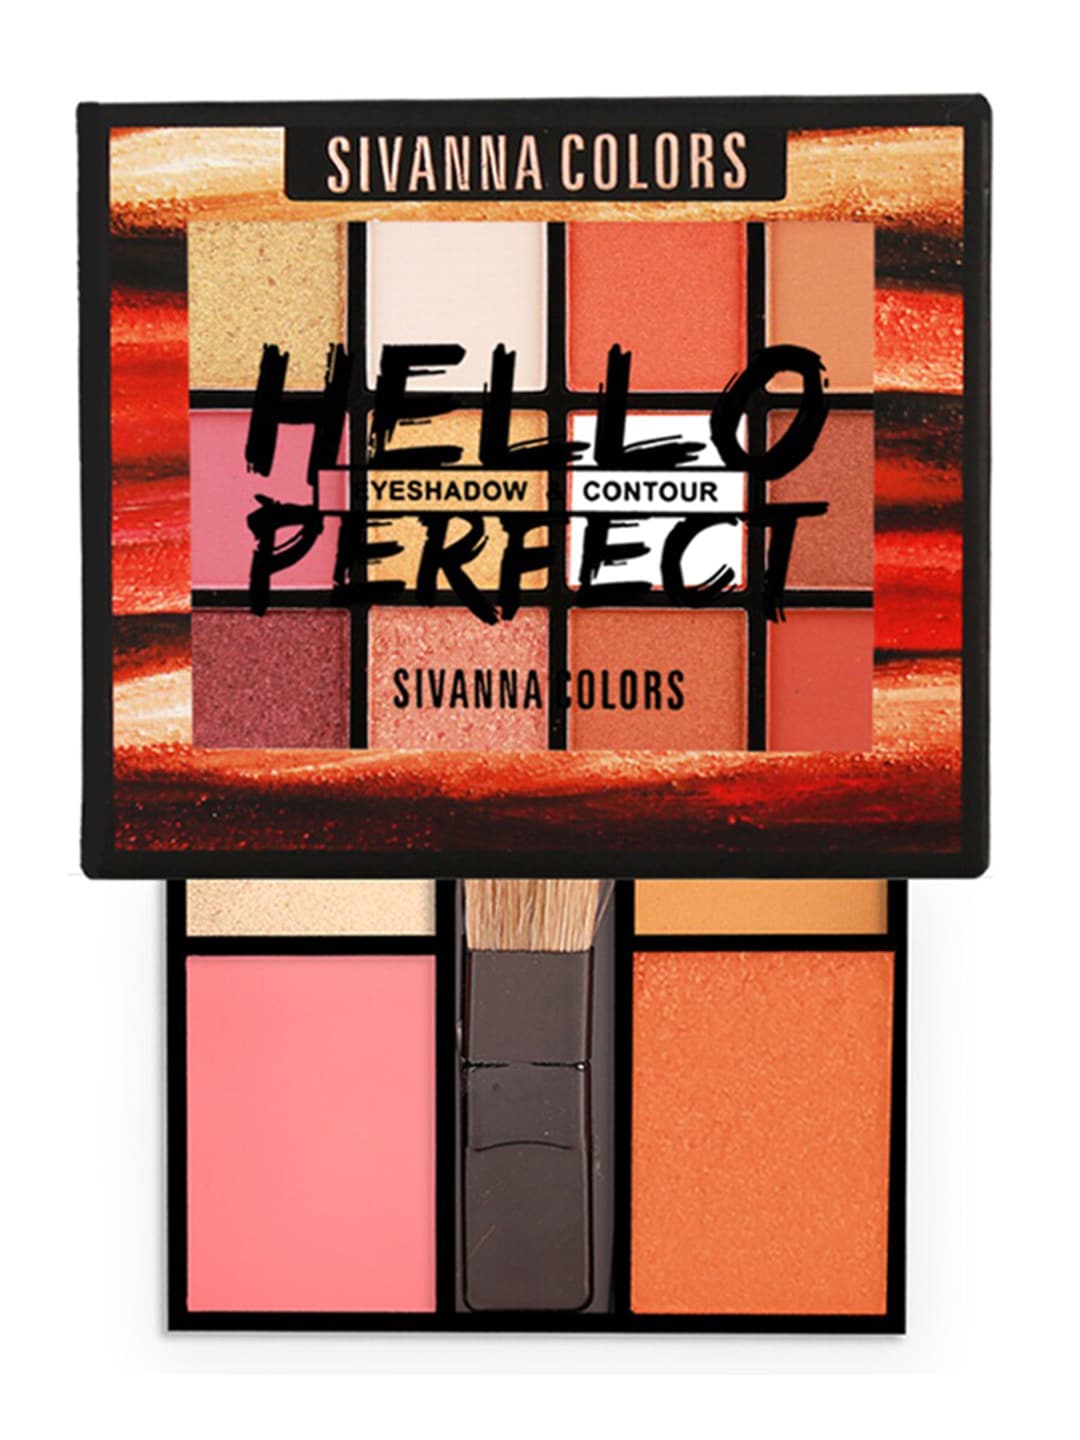 Sivanna Colors Hello Perfect Eye Shadow & Contour Mini Palette - HF5016 03 Price in India